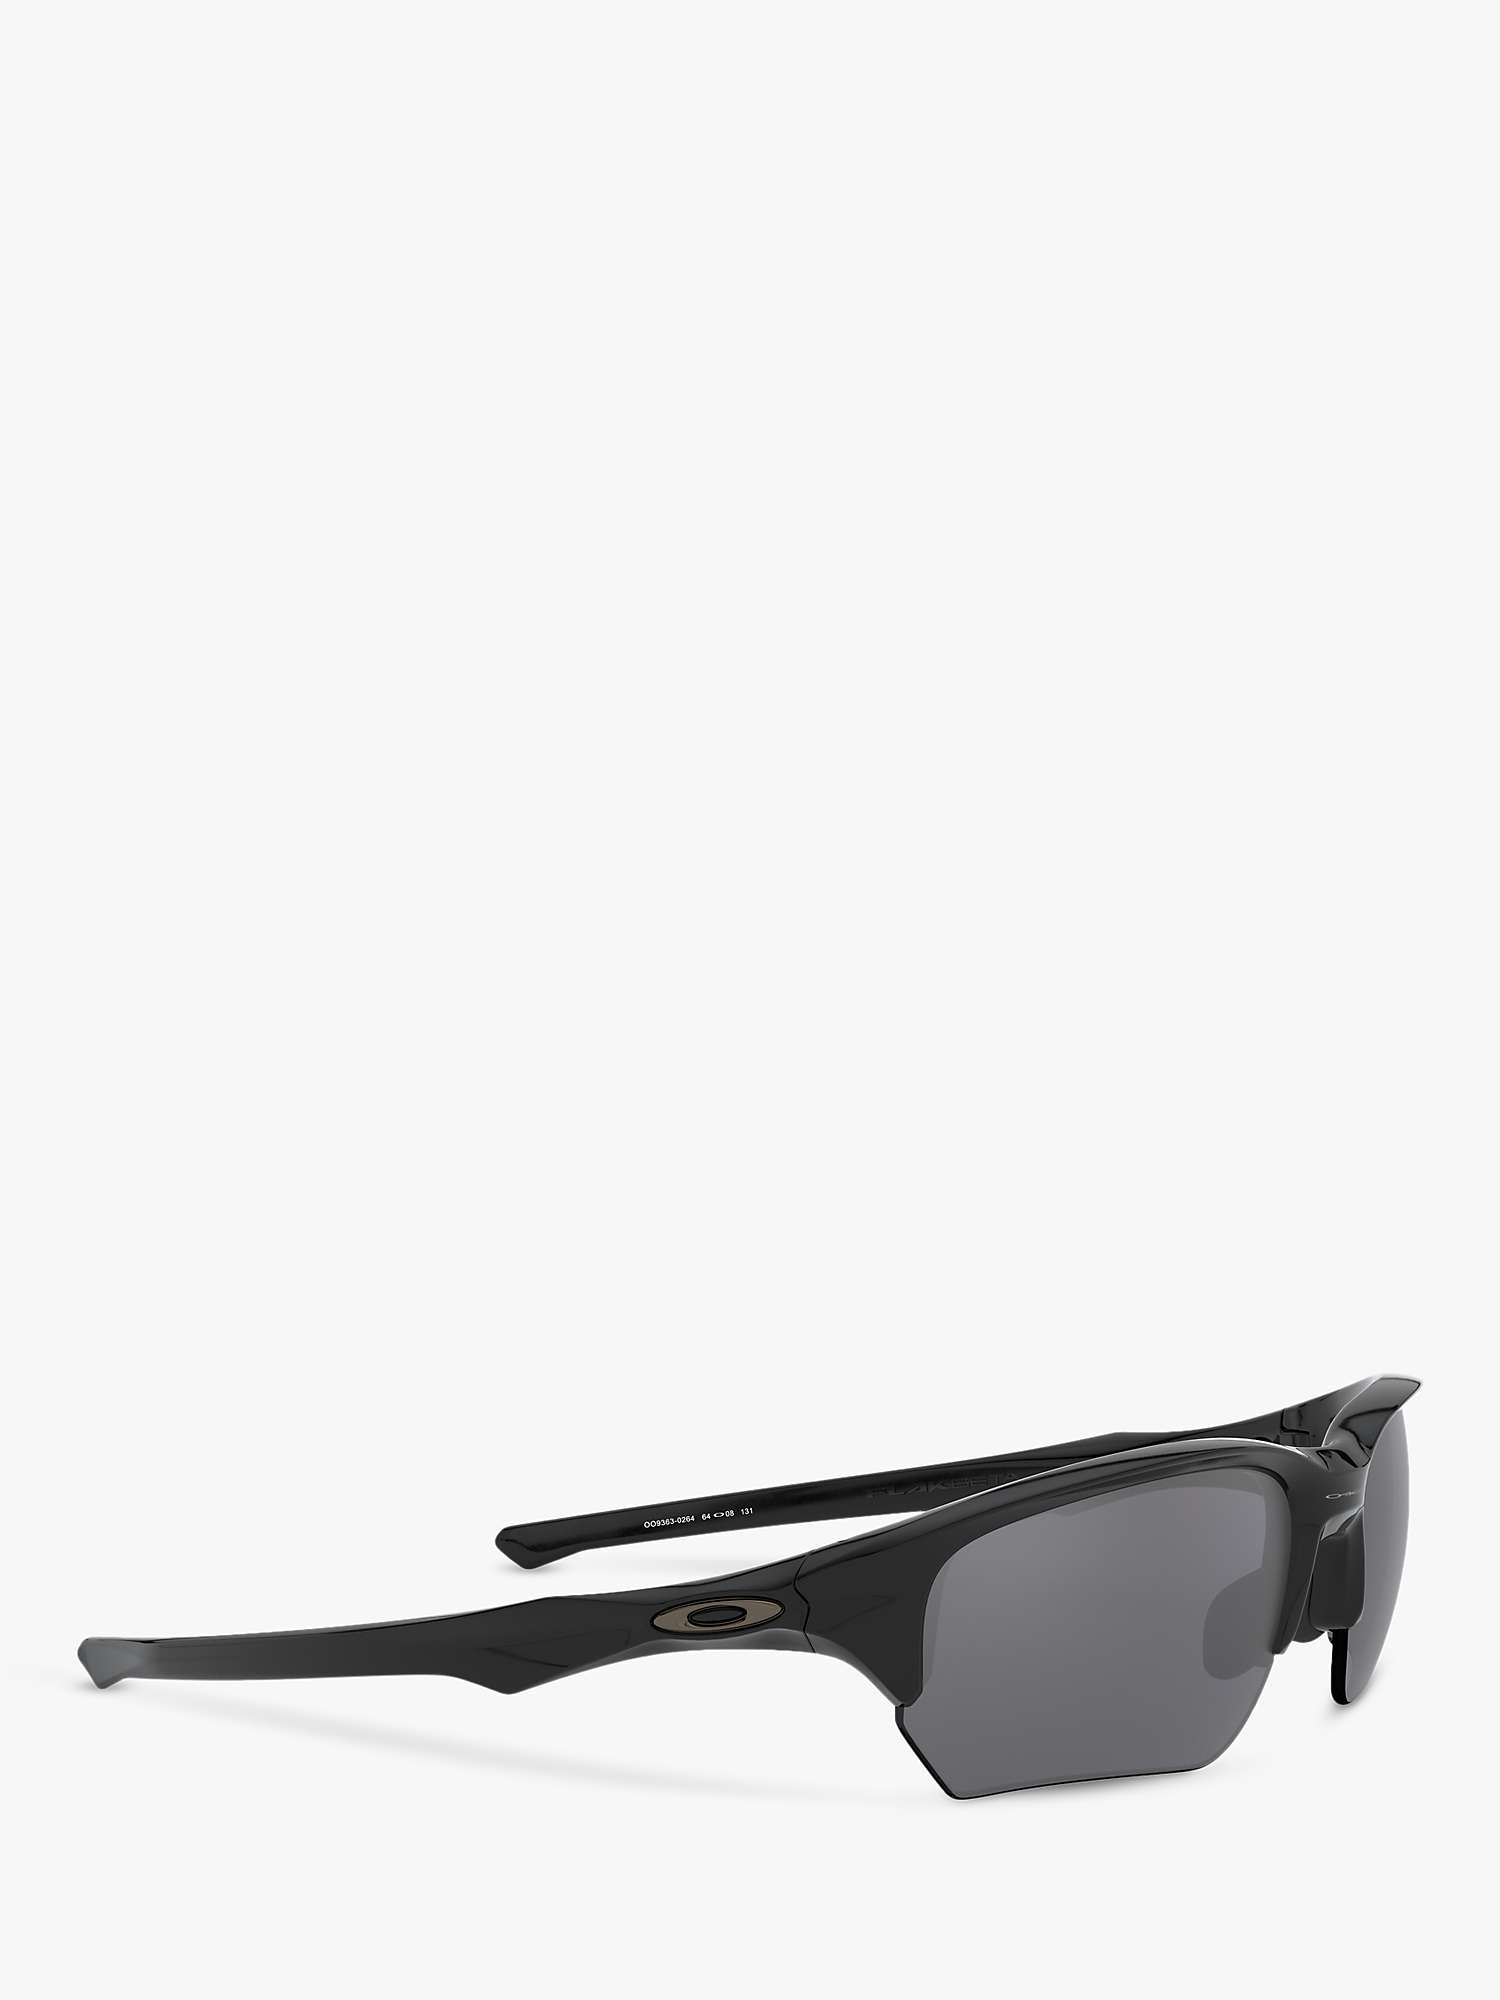 Buy Oakley OO9363 Men's Prizm Rectangular Sunglasses Online at johnlewis.com